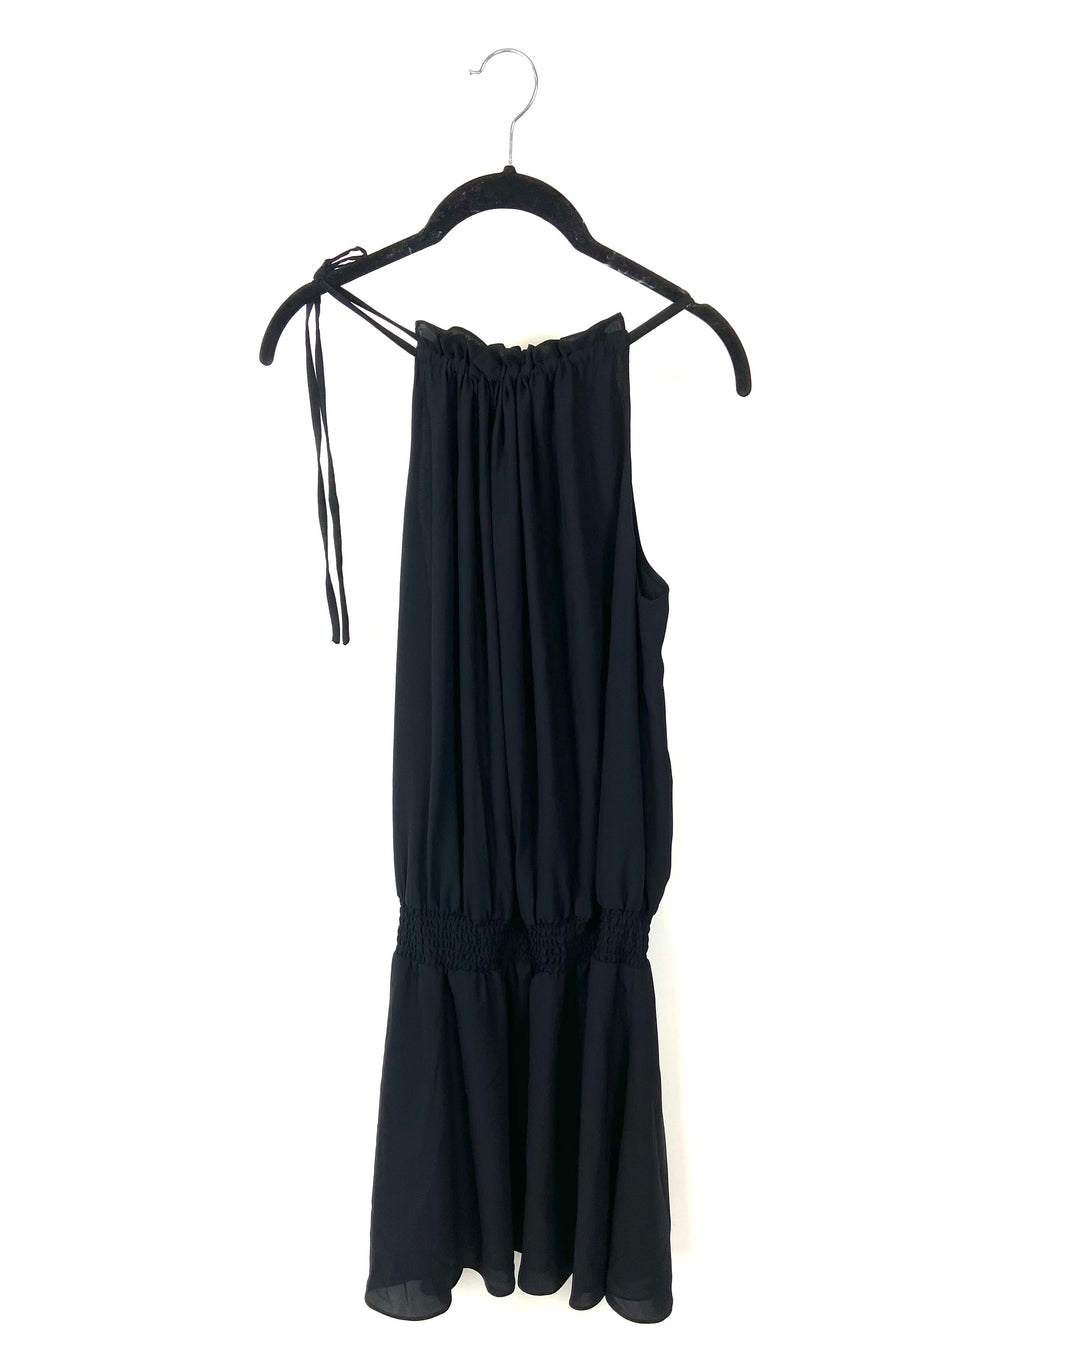 Black Ruffled Dress - Small